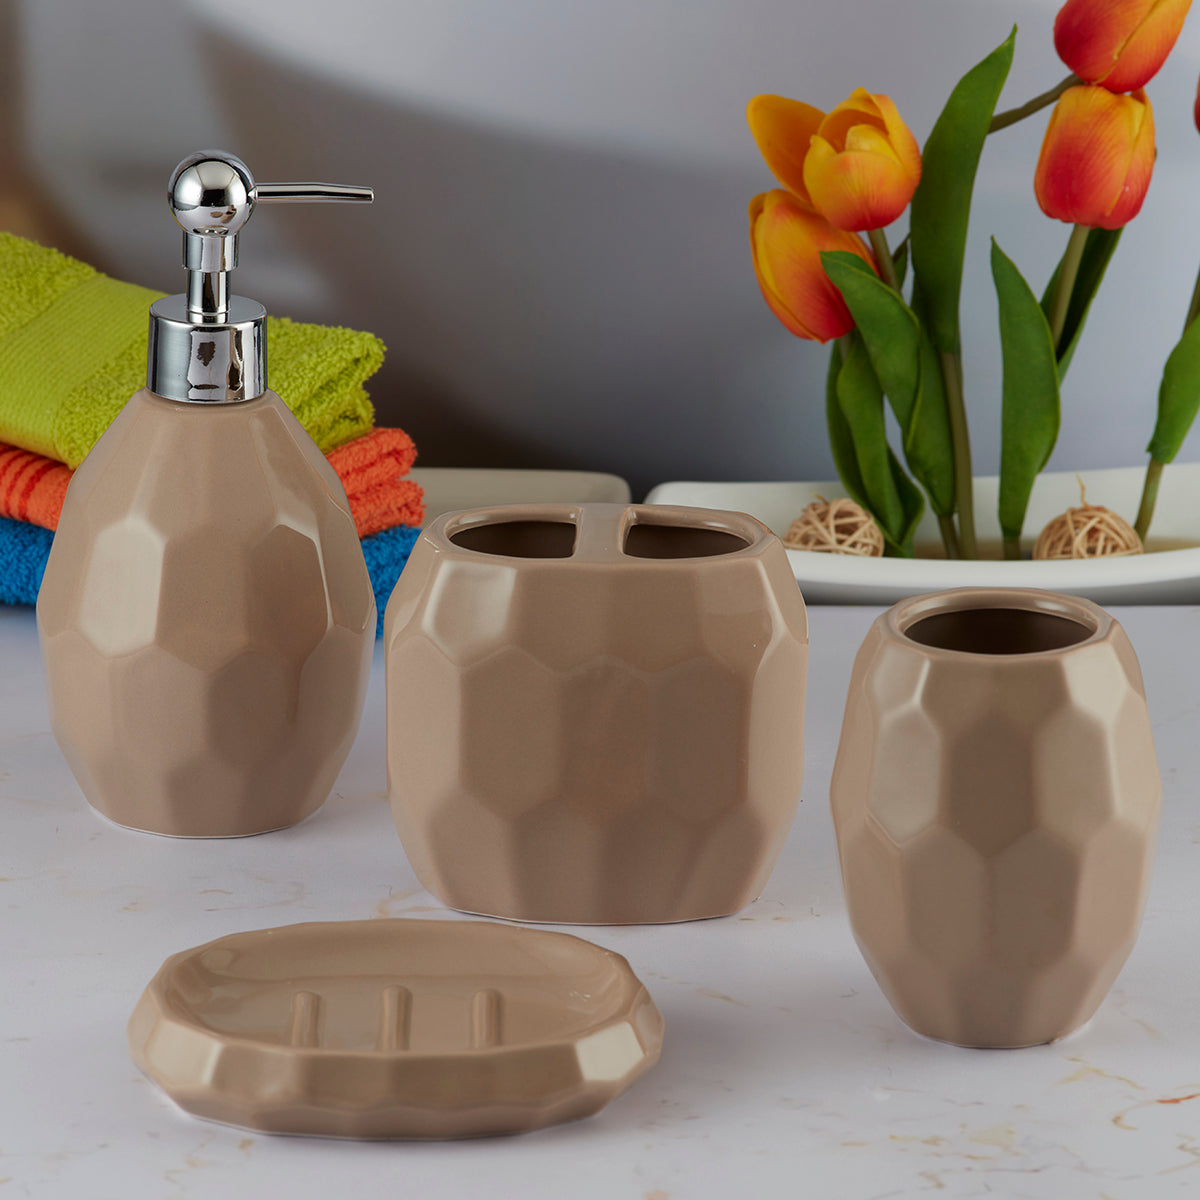 Ceramic Bathroom Accessories Set of 4 Bath Set with Soap Dispenser (8108)